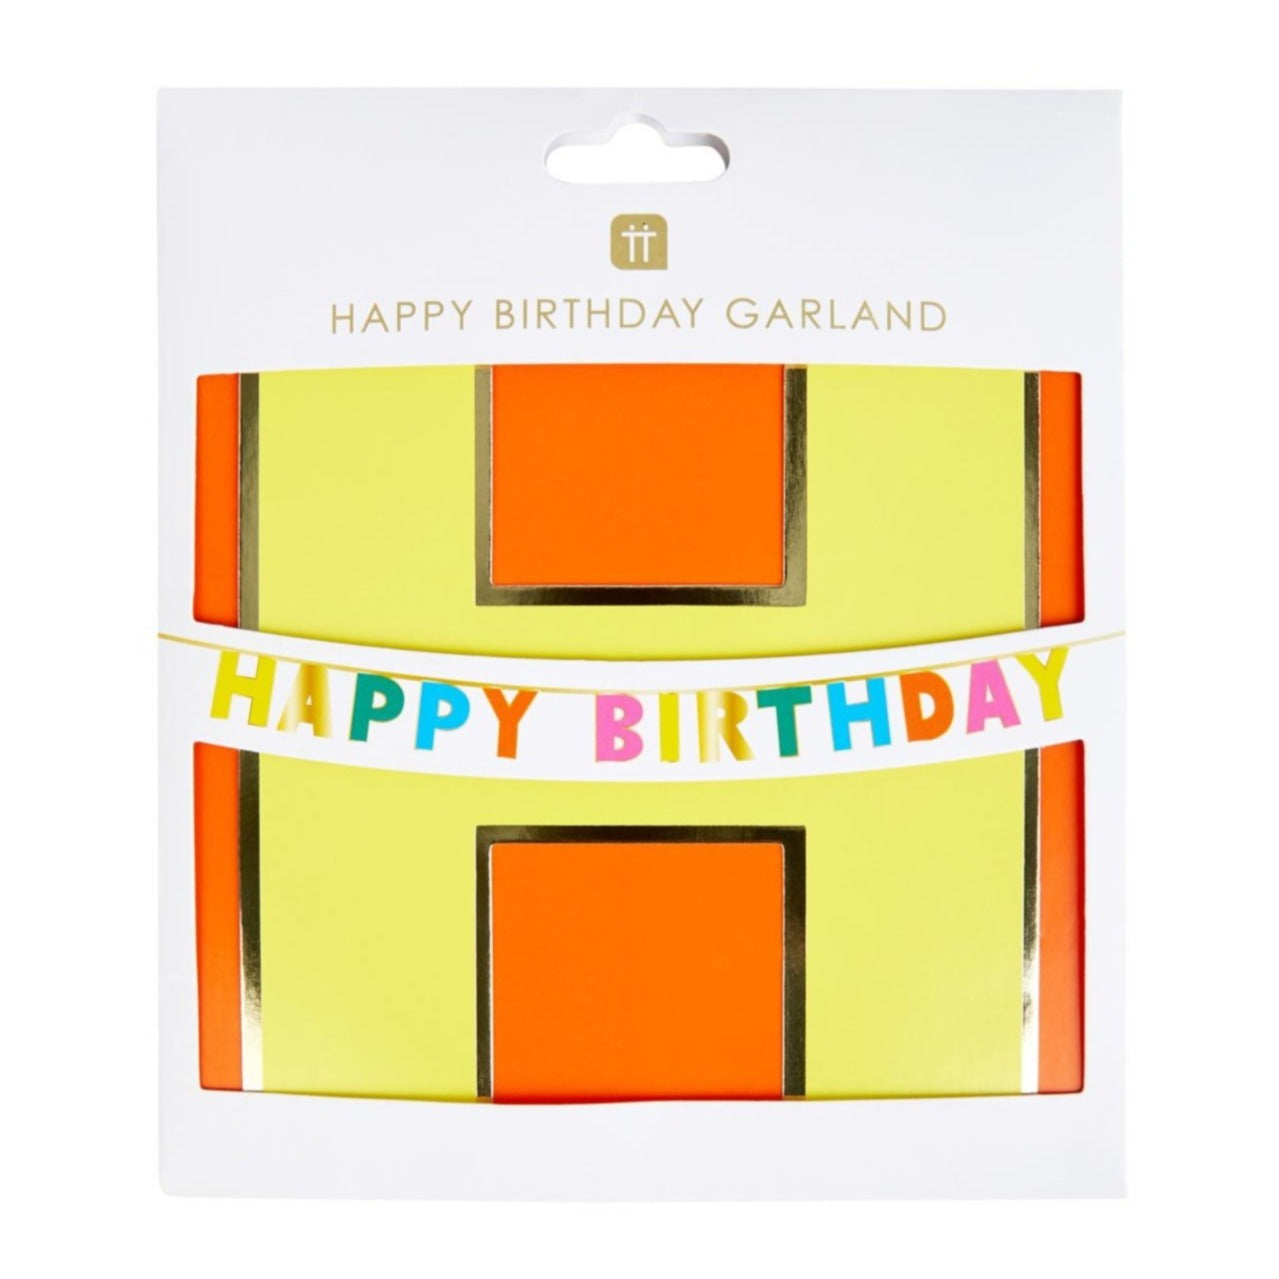 Happy Birthday garland